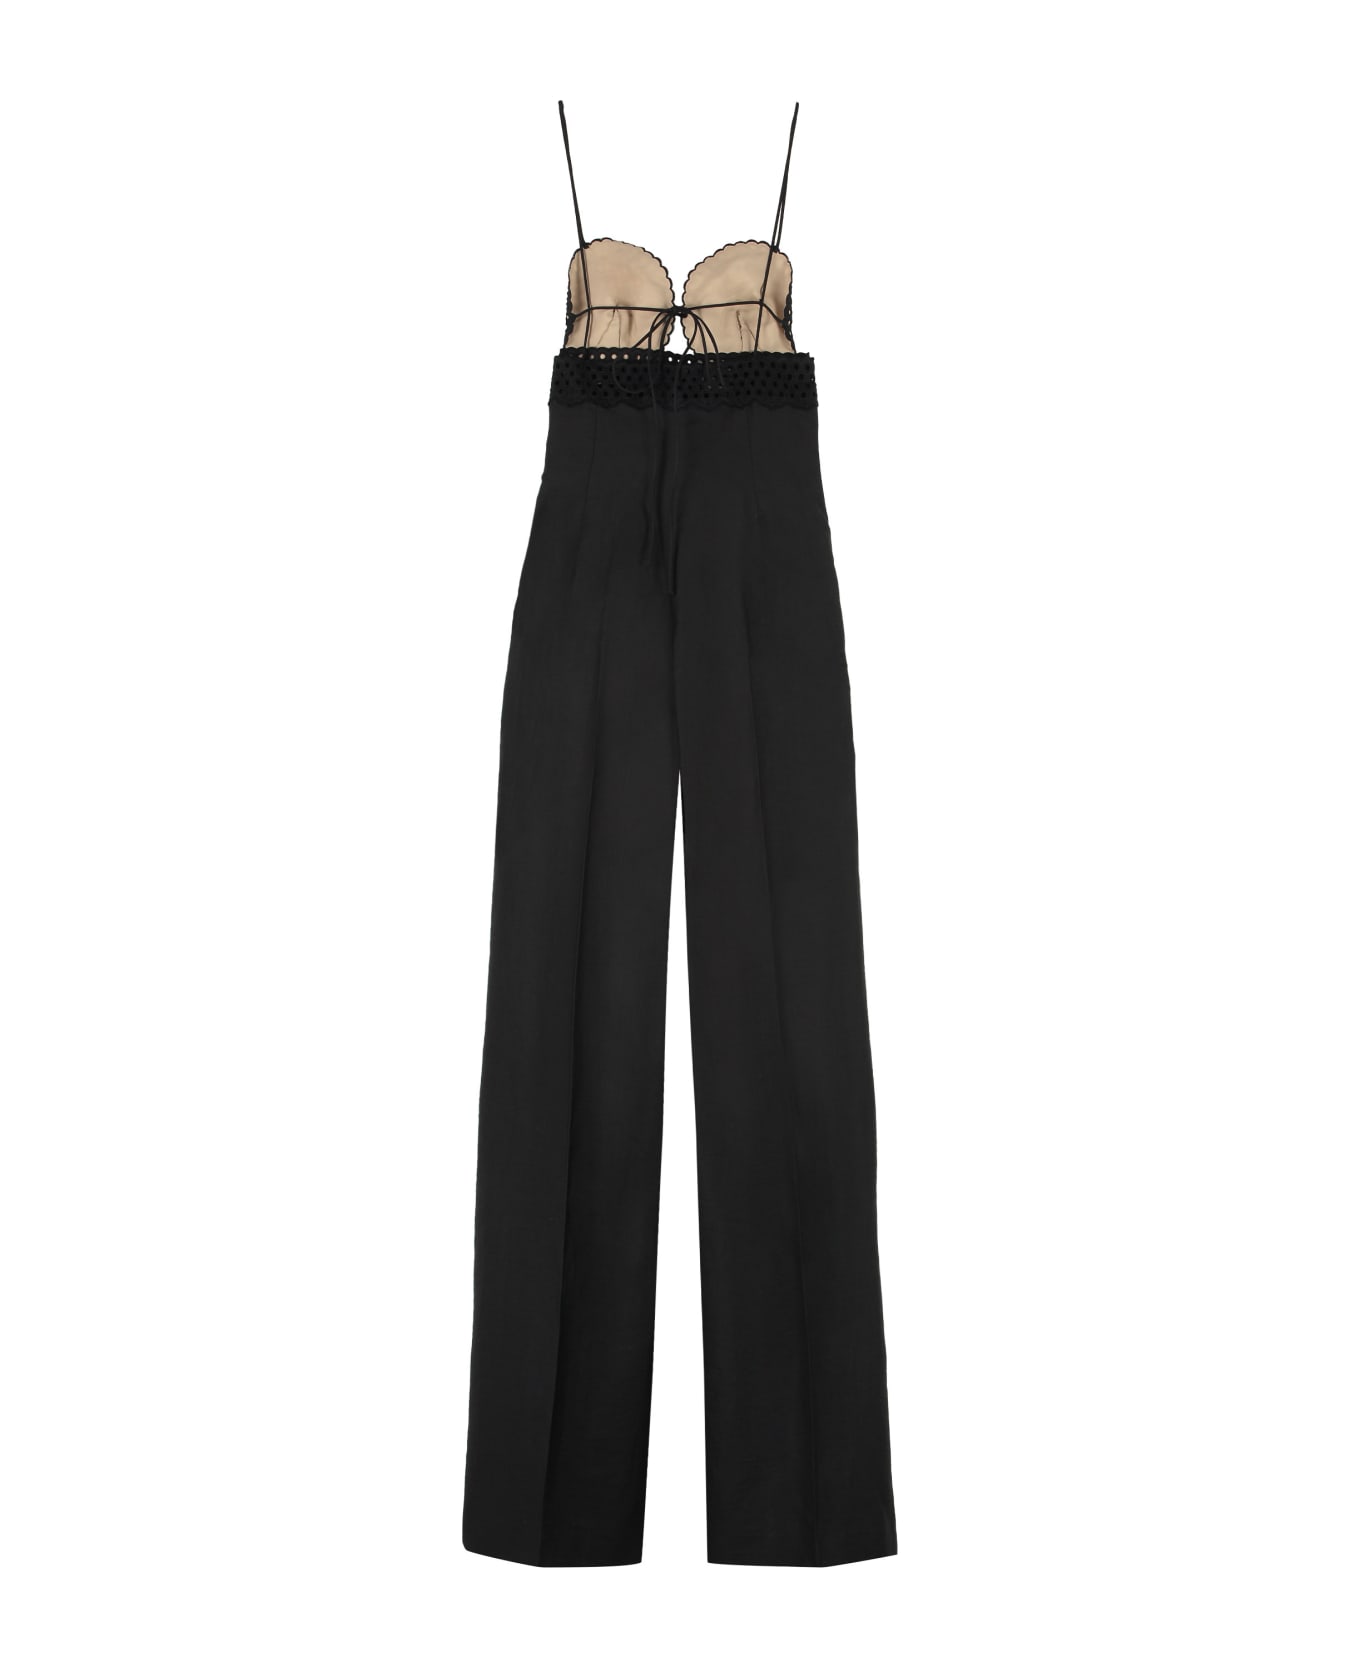 Stella McCartney Wide-leg Pants Jumpsuit - black ジャンプスーツ